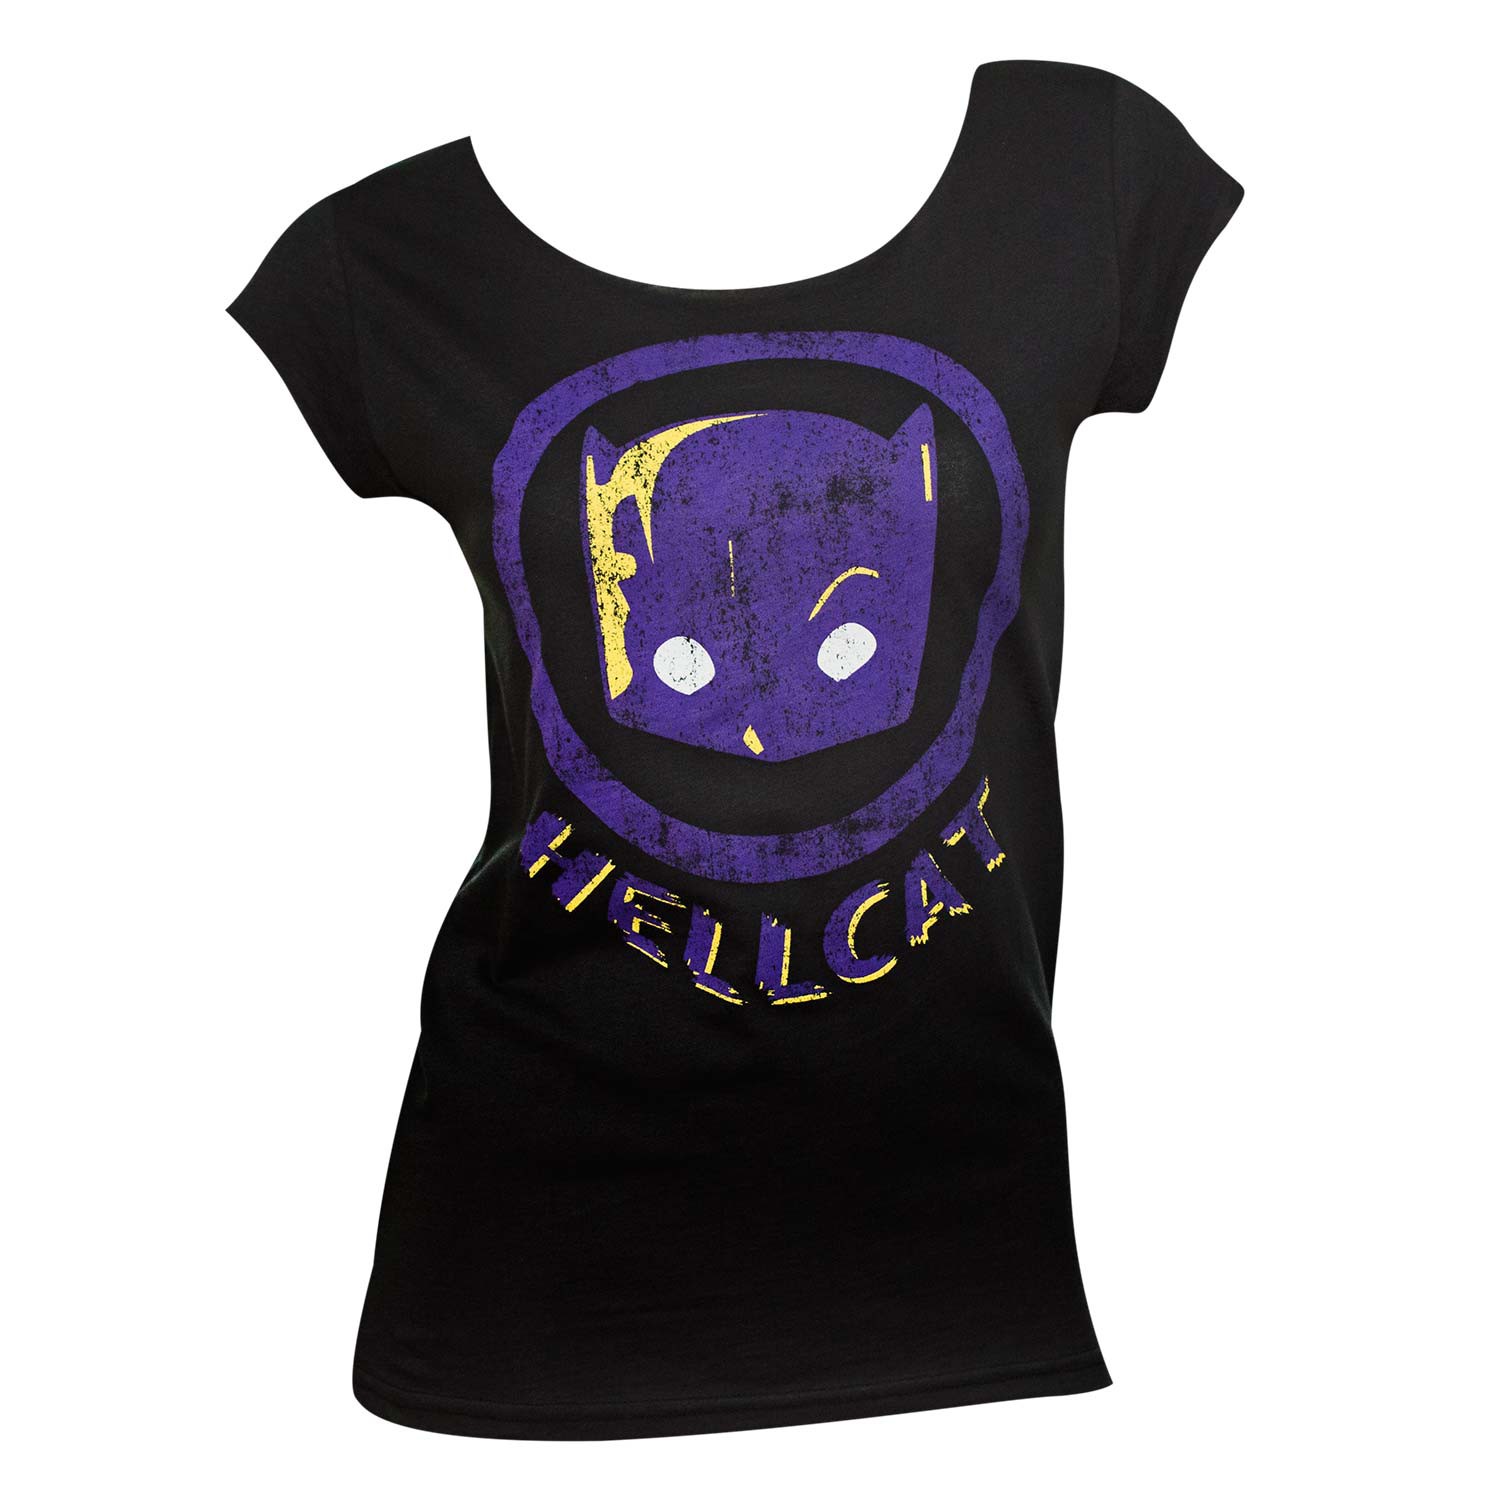 Hawkeye Women's Hellcat Distressed Tee Shirt